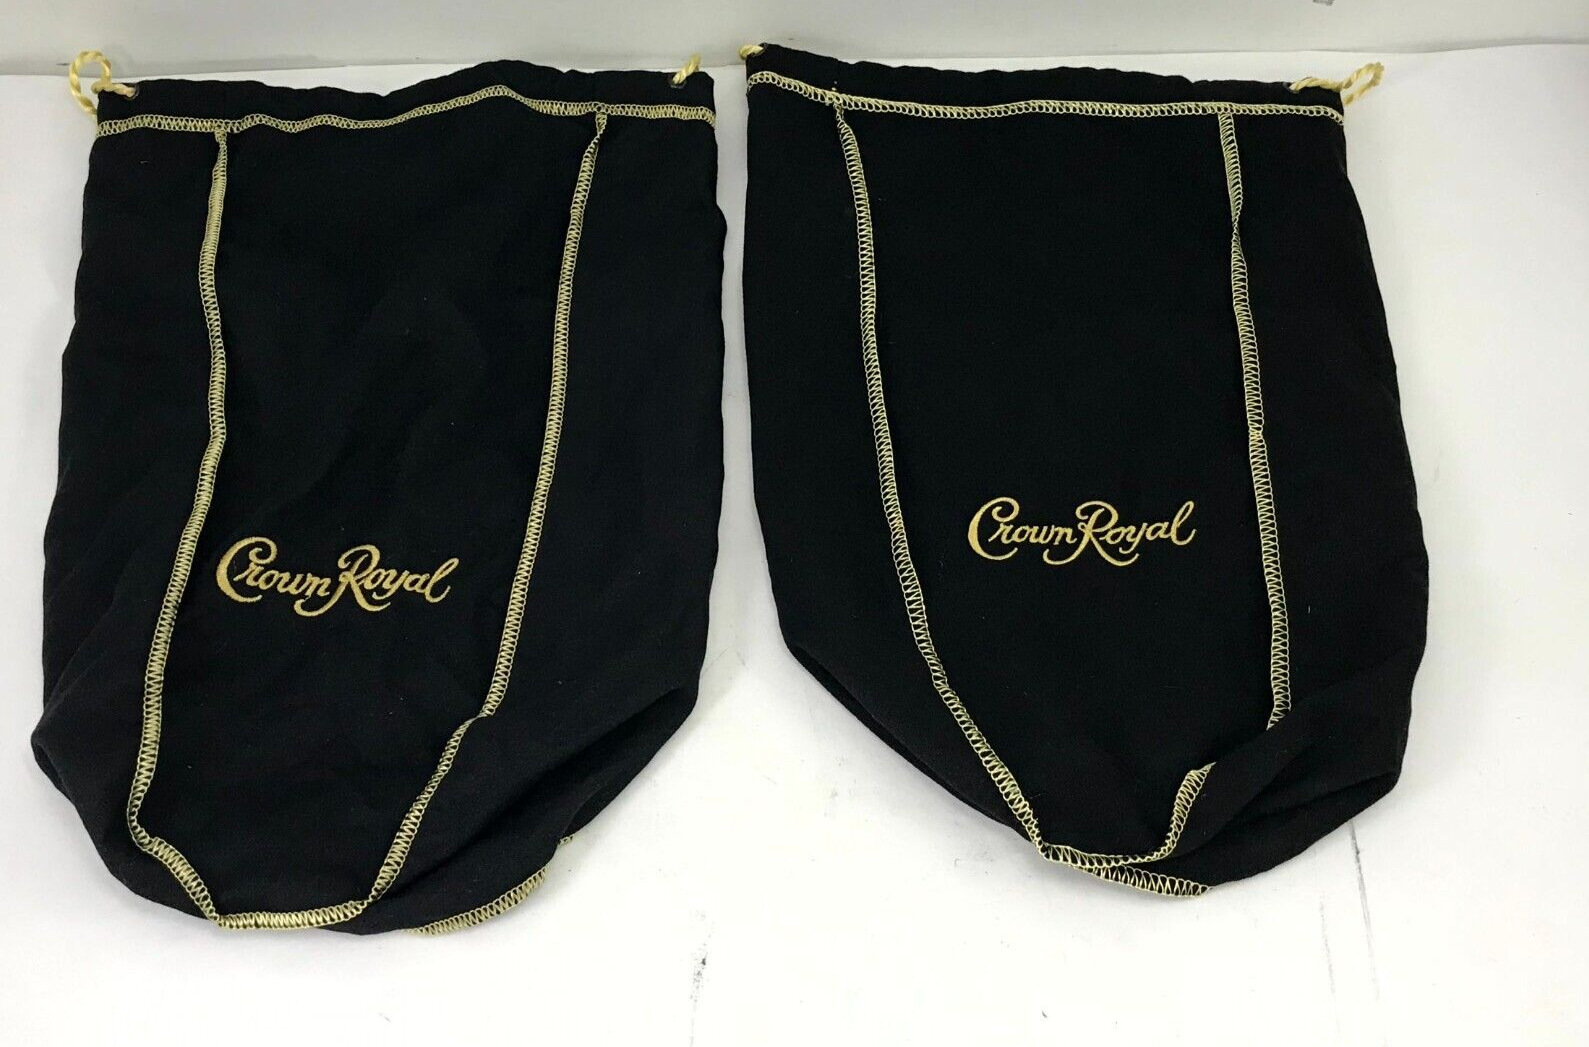 Lot of 2 - Crown Royal 1.75L Extra Large Black Drawstring Bags 12 inch